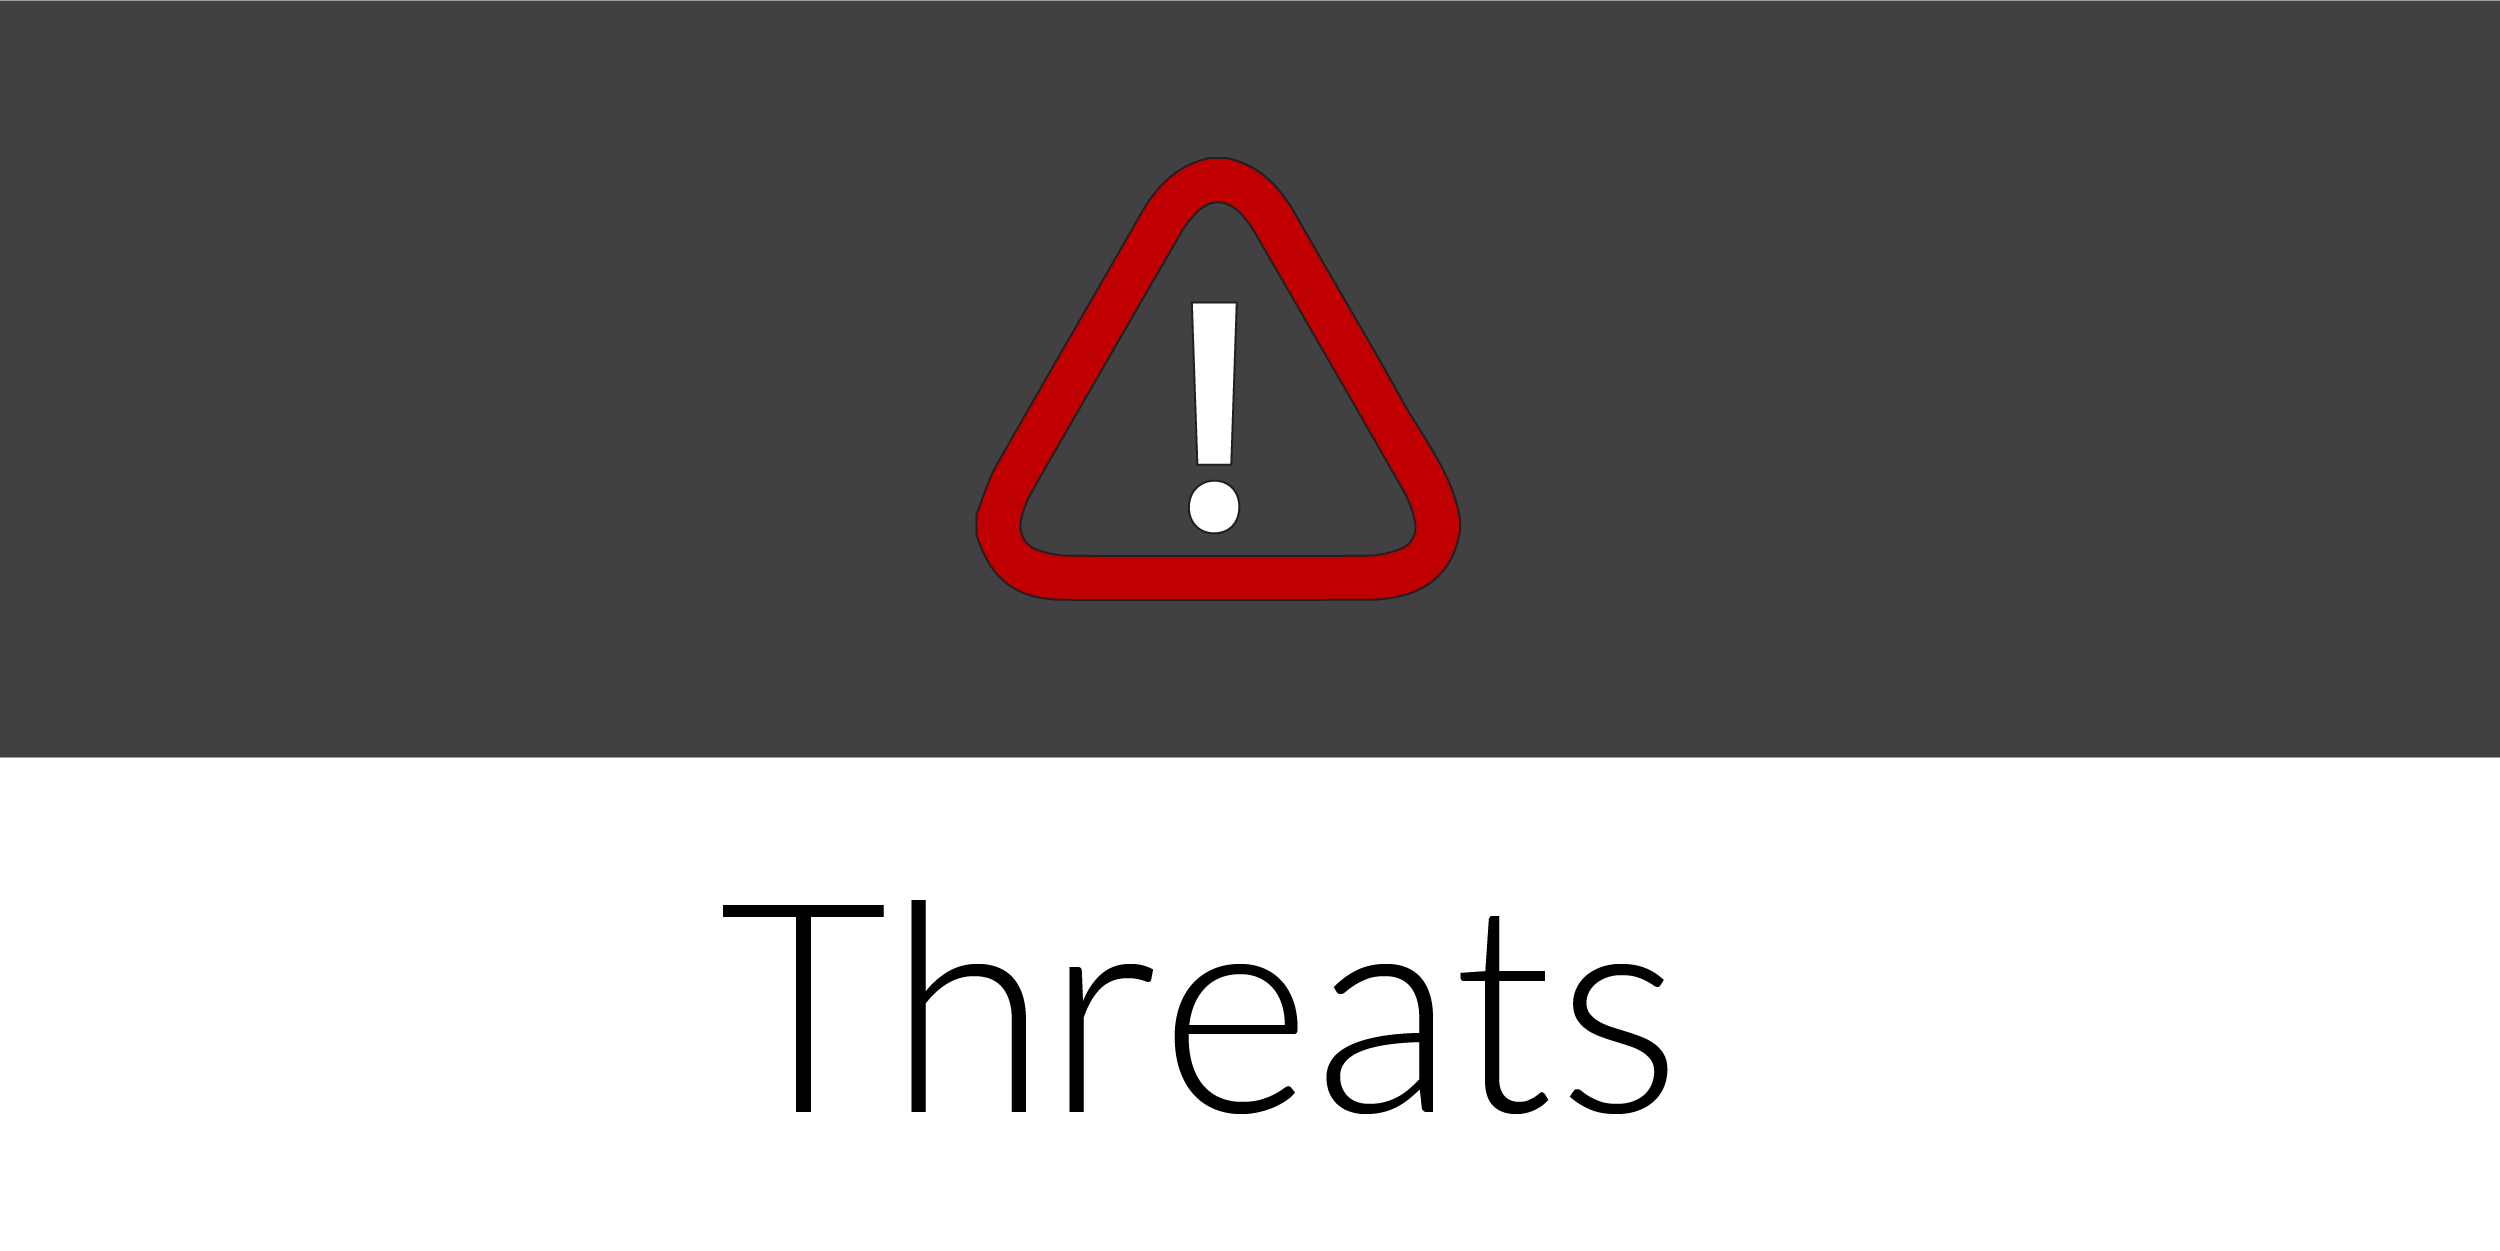 SWOT Analysis - Threats